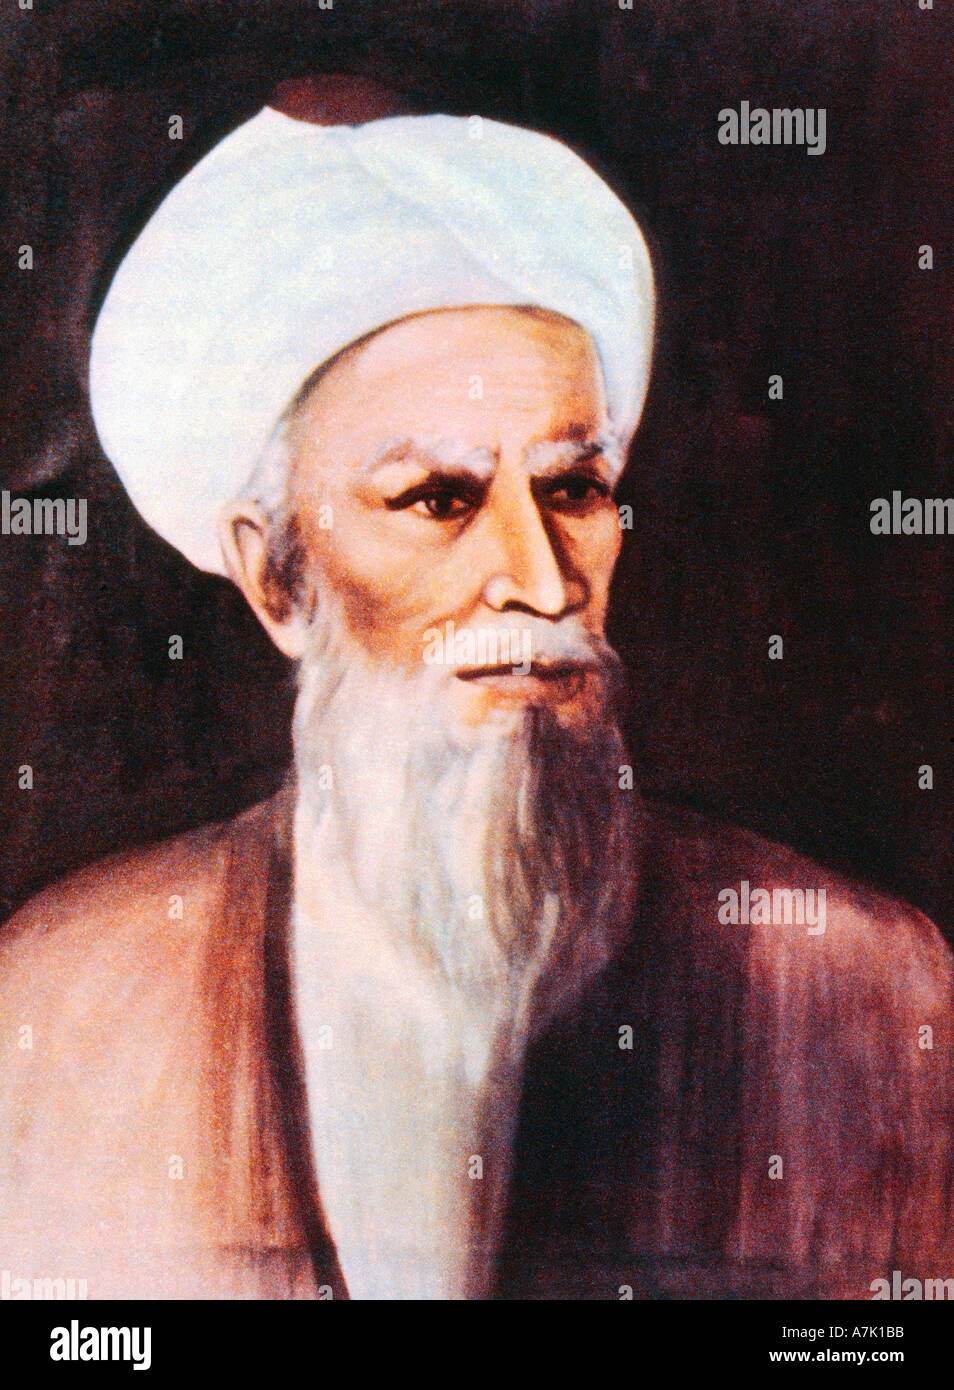 Download preview image - mohammad-ibn-zakariya-al-razi-864-930-ad-philosopher-author-astronomy-A7K1BB